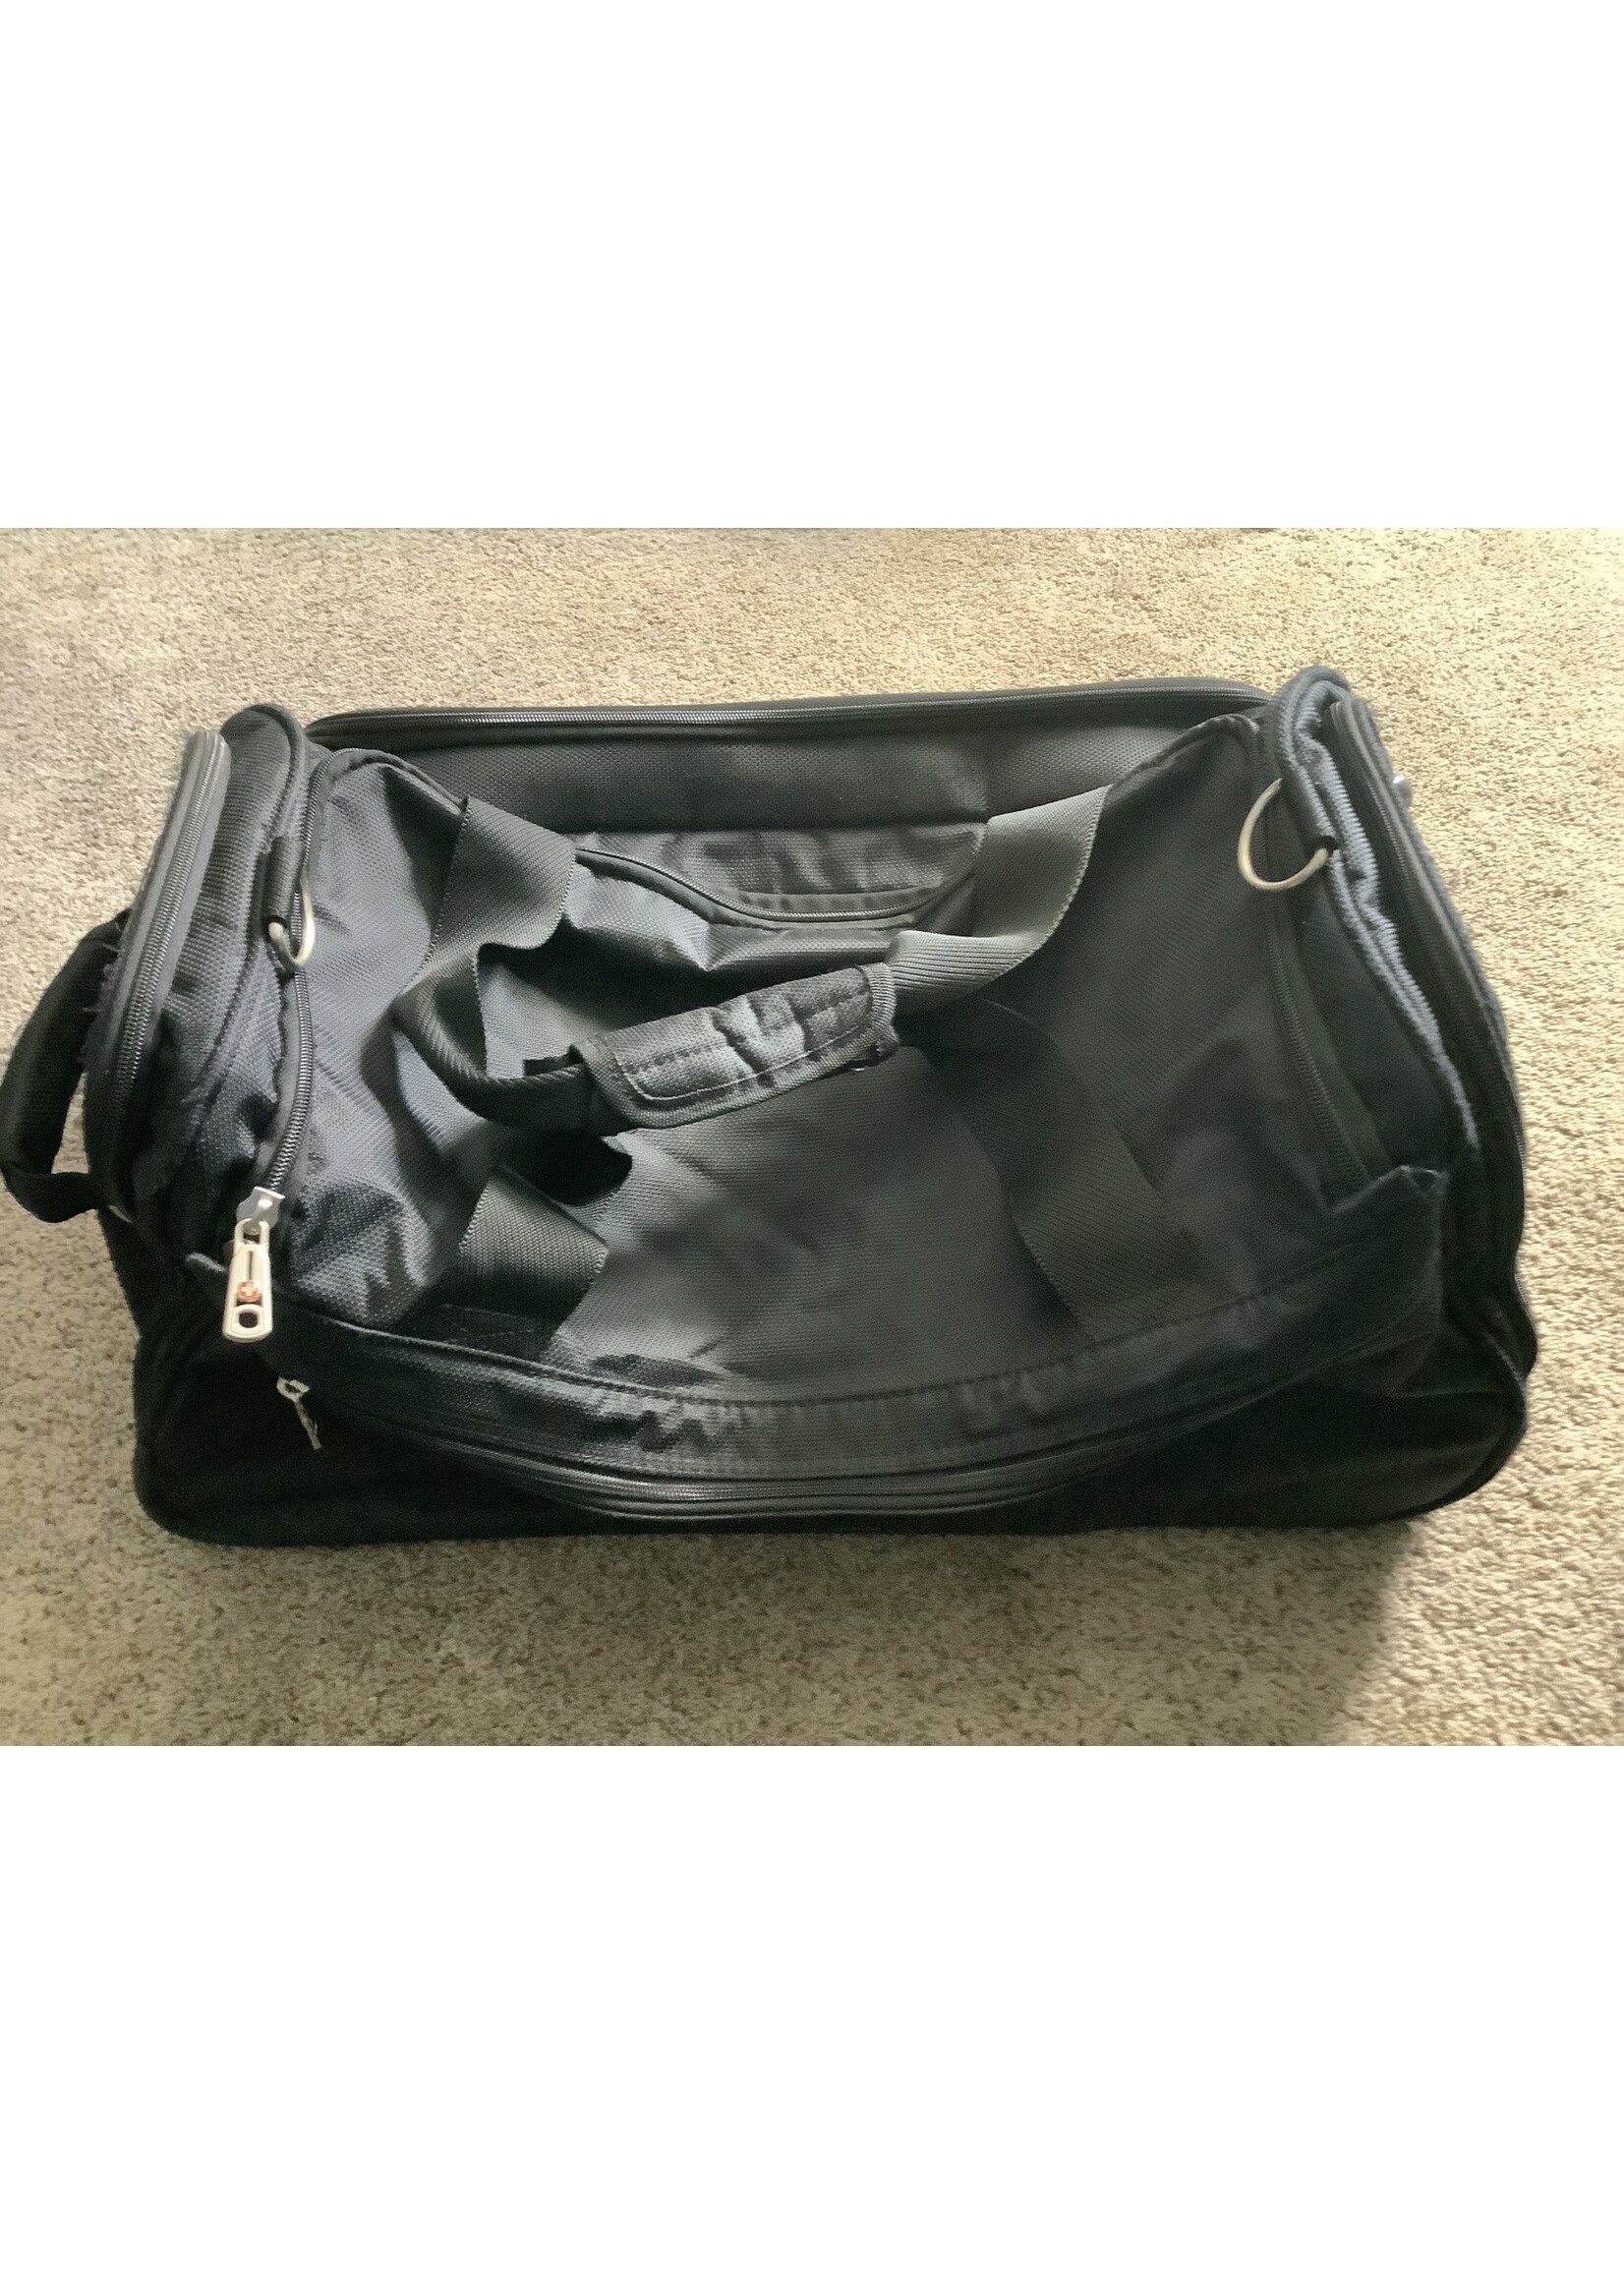 *Used/Missing Long Strap* SWISSGEAR Zurich 48L Wheeled Duffel Bag - Black